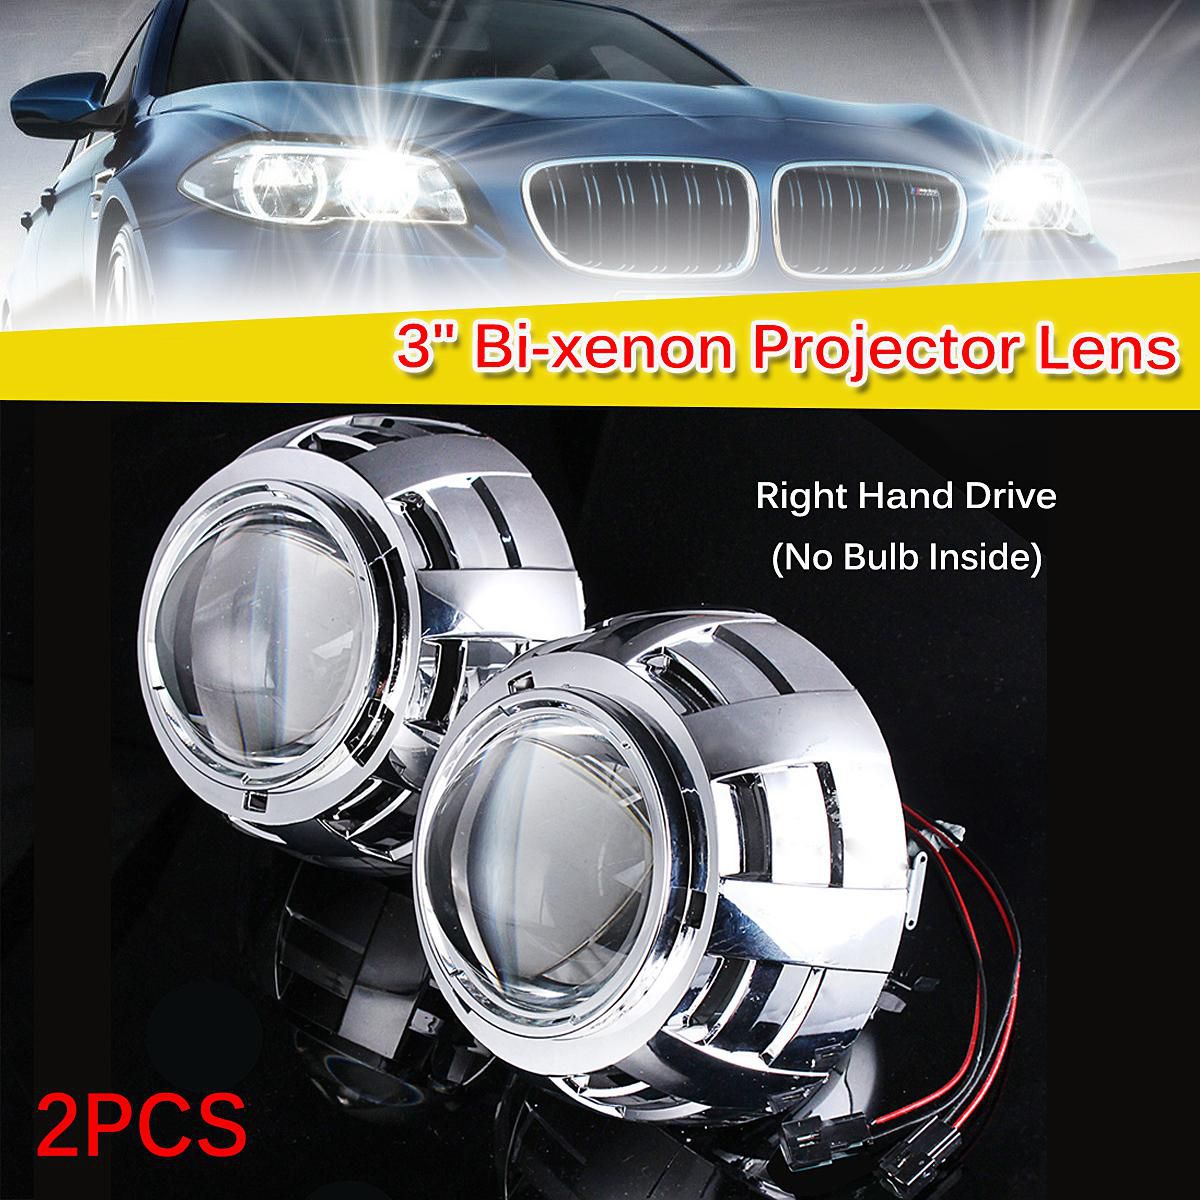 Fugen 2pcs 3 Inch Bi-Xenon Projector Bi-Xenon HID Projector Lens Kit Shroud for H1 H4 H7 RHD Bulb High Beam and Low Beam 